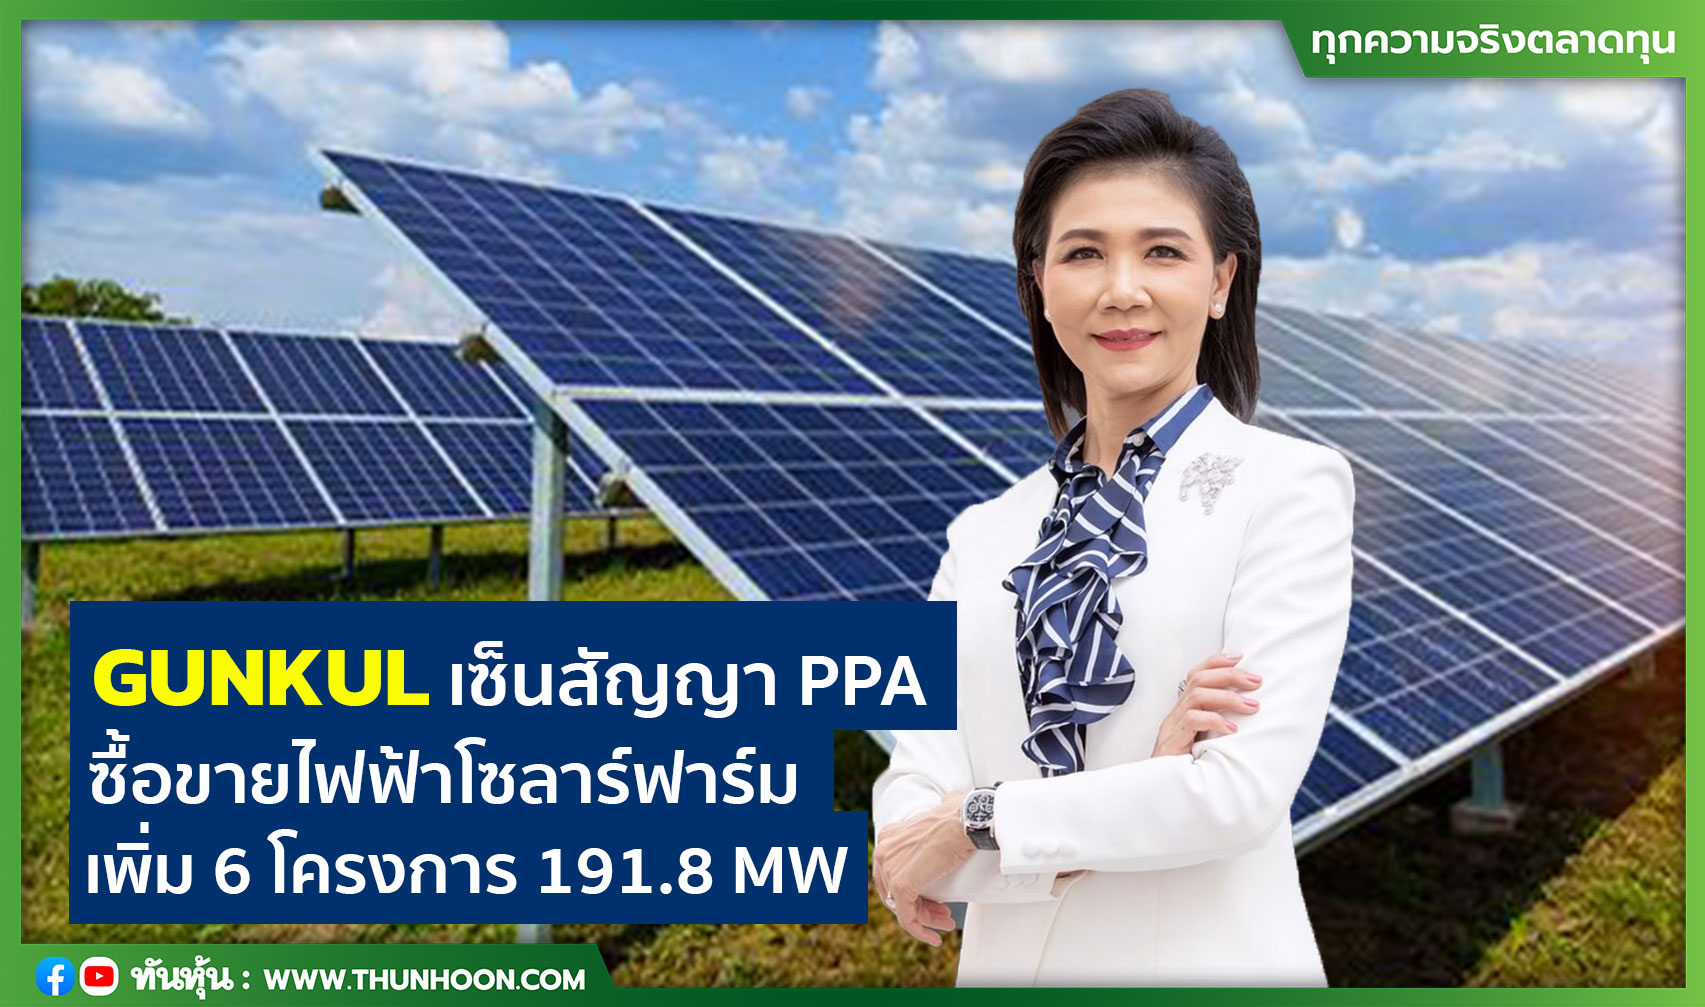 GUNKUL เซ็น PPA ซื้อขายไฟฟ้าโซลาร์ฟาร์มเพิ่ม 6 โครงการ 191.8 MW